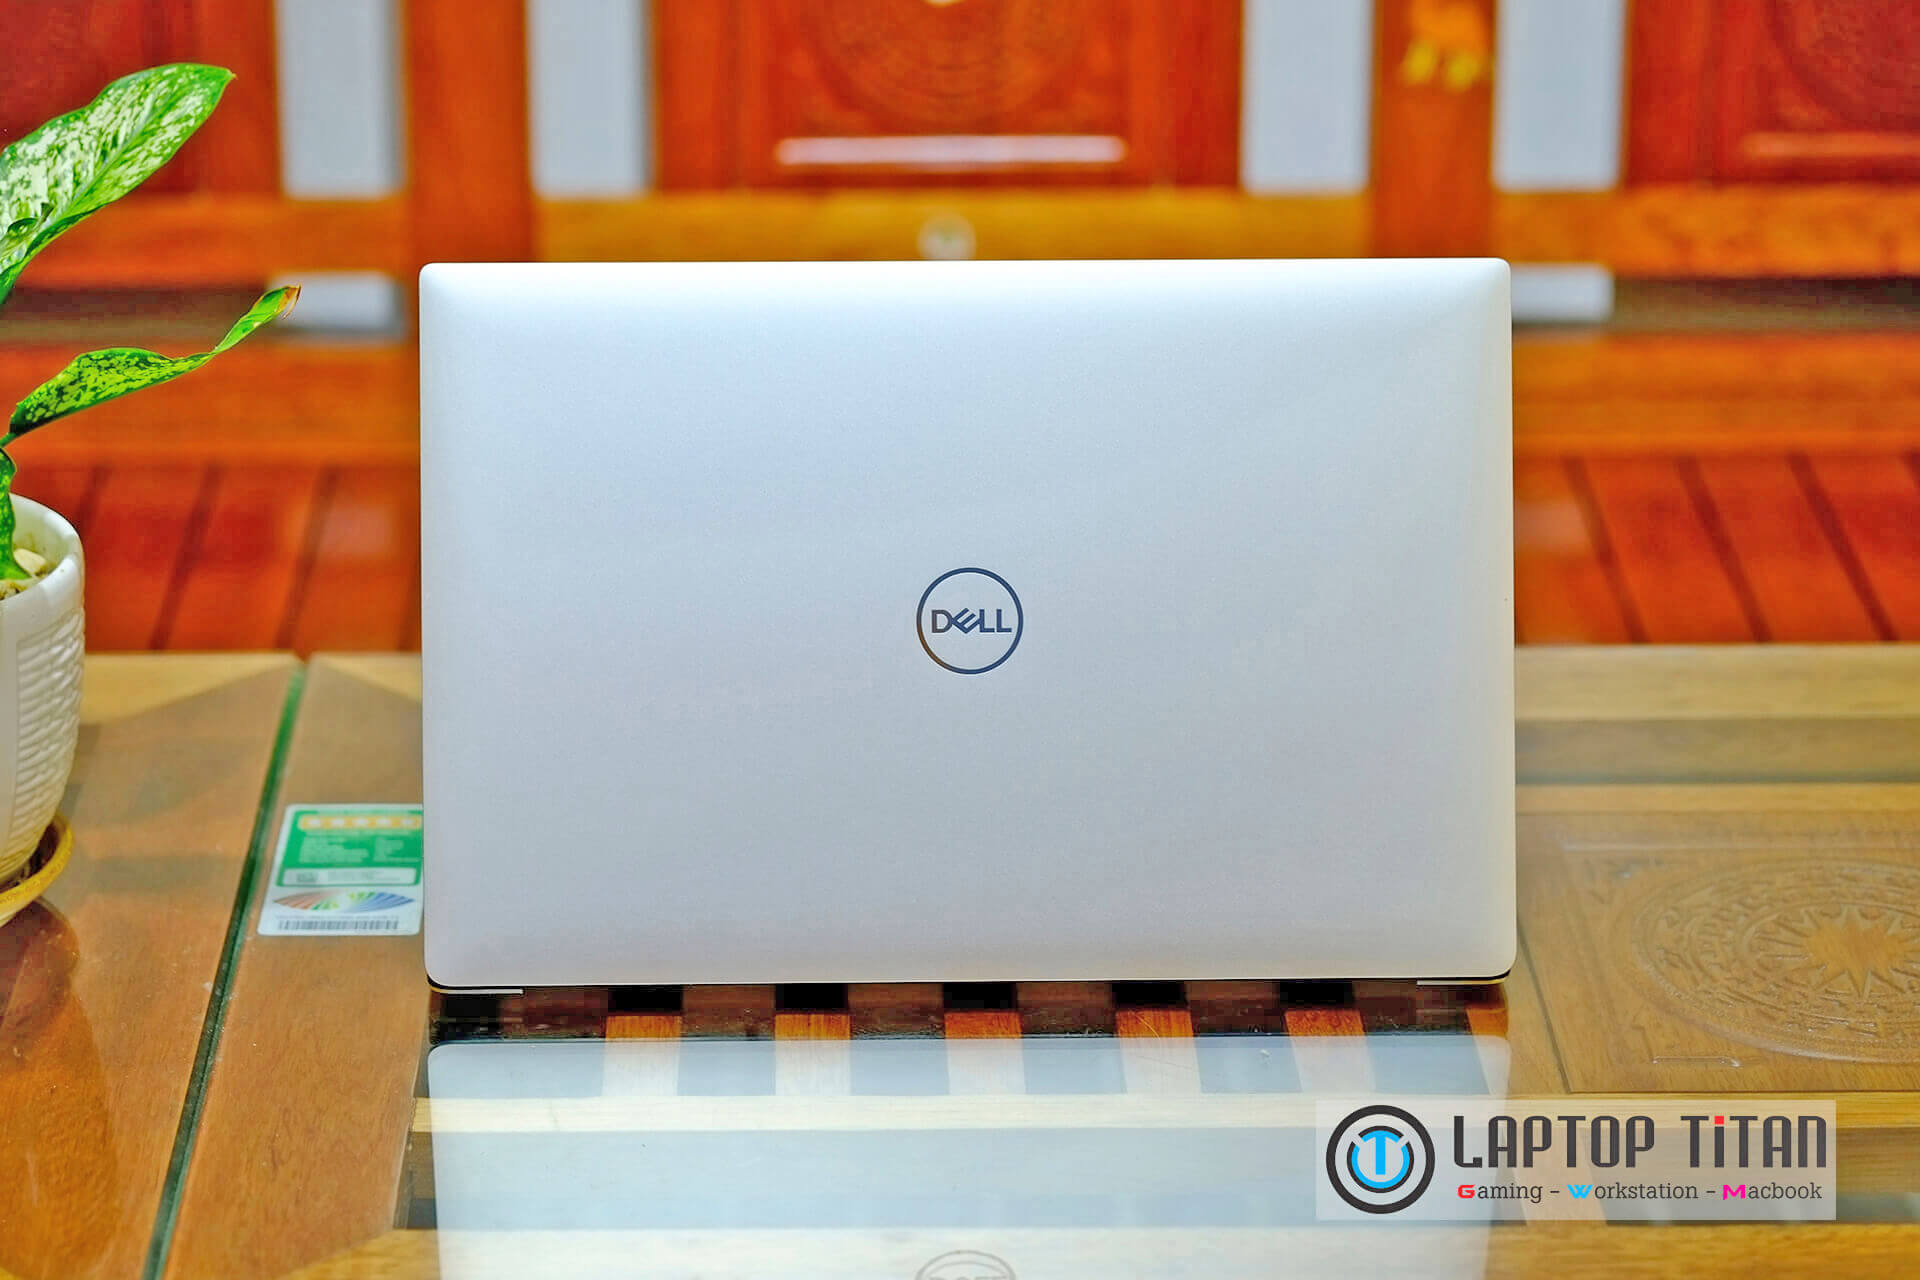 Dell-Xps-15-9570-laptoptitan-07.jpg